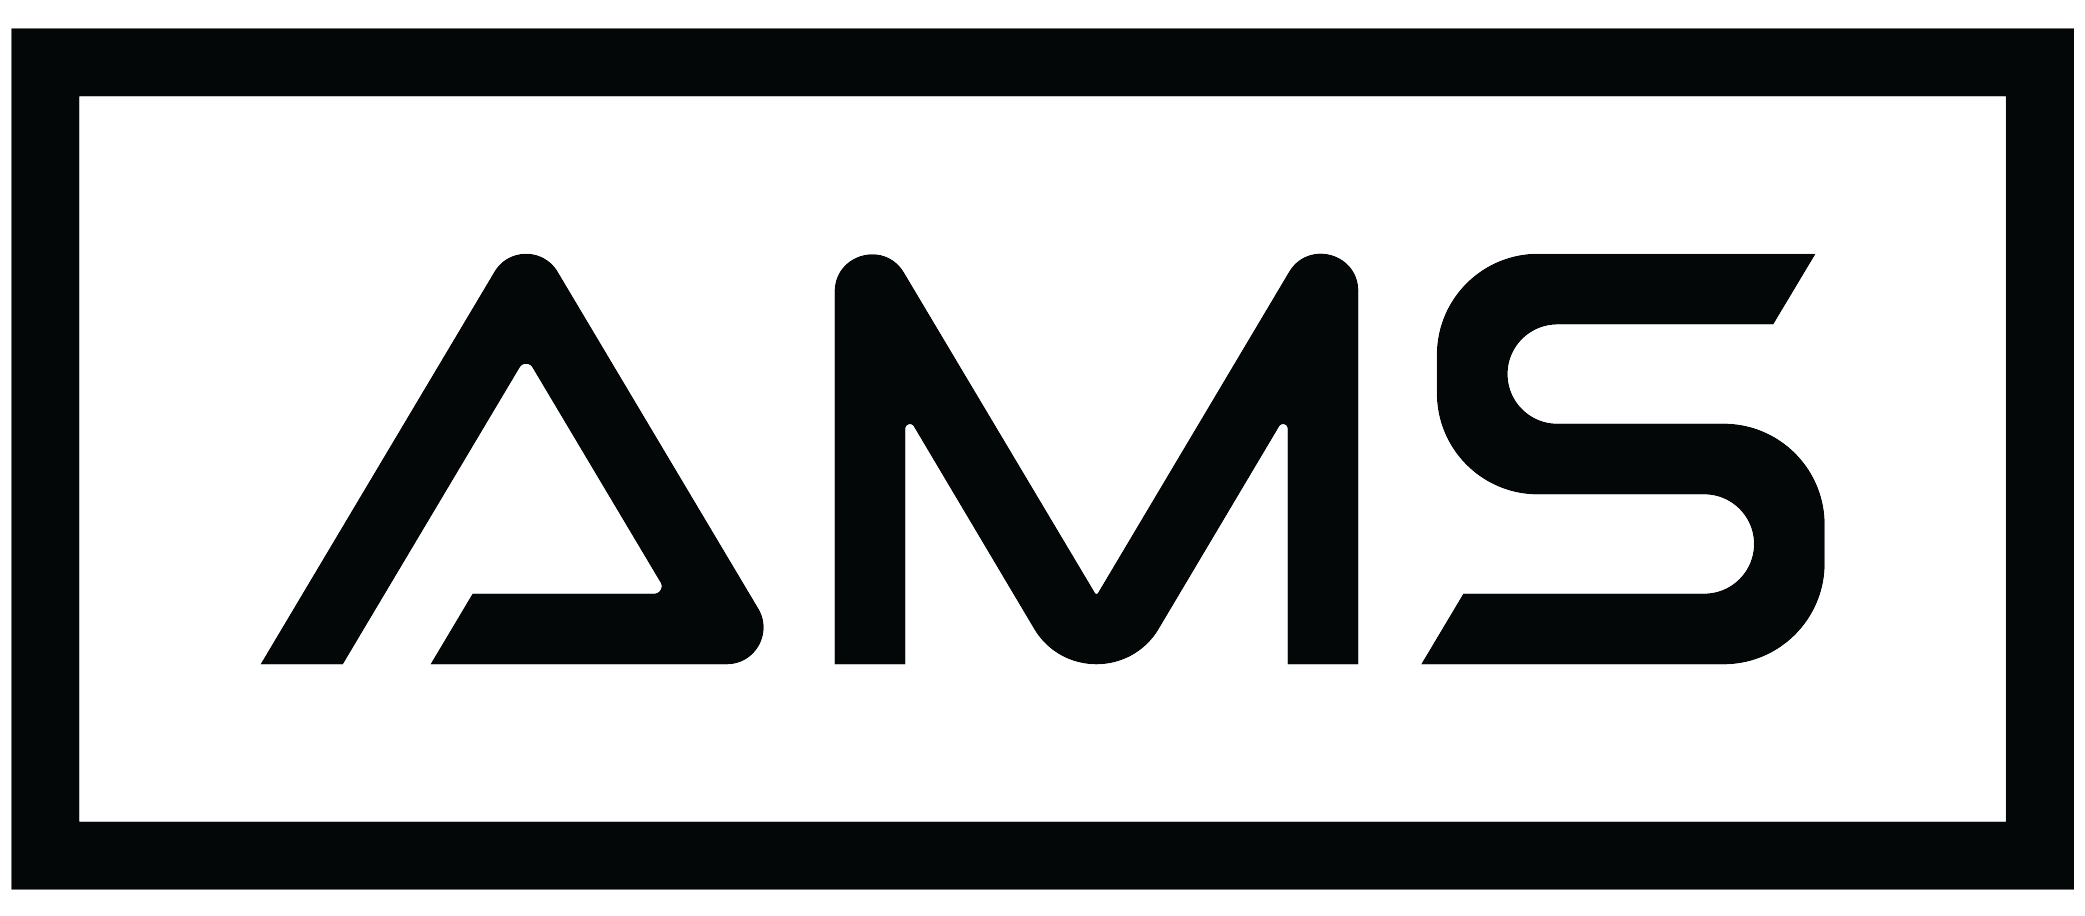 AMS Logo - AMS